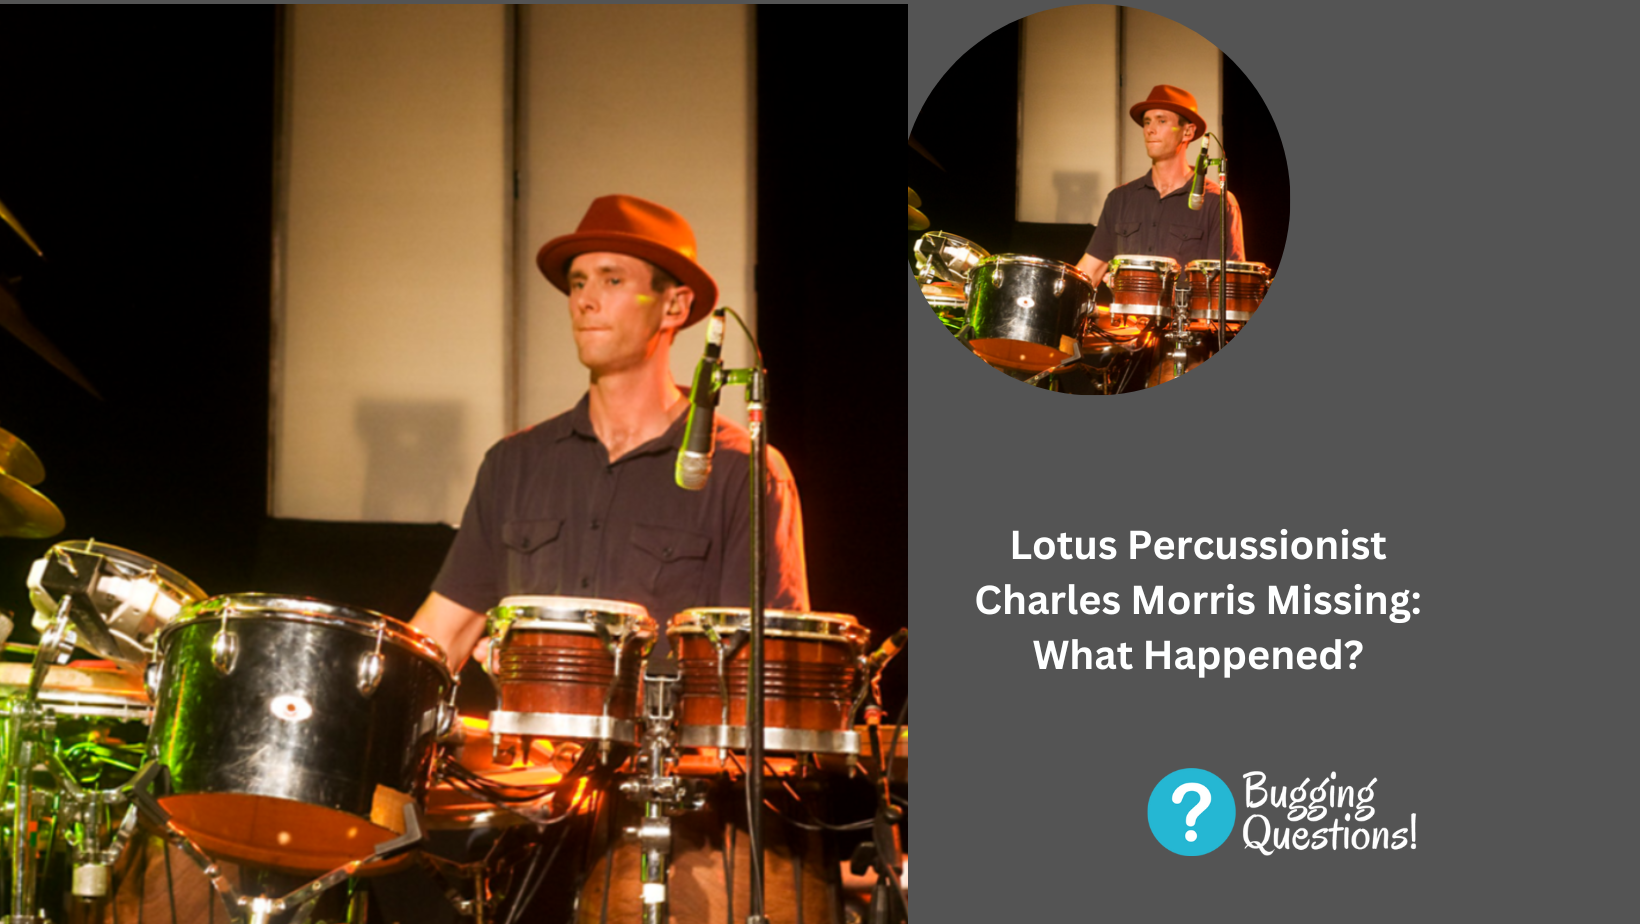 Lotus Percussionist Charles Morris Missing: What Happened?